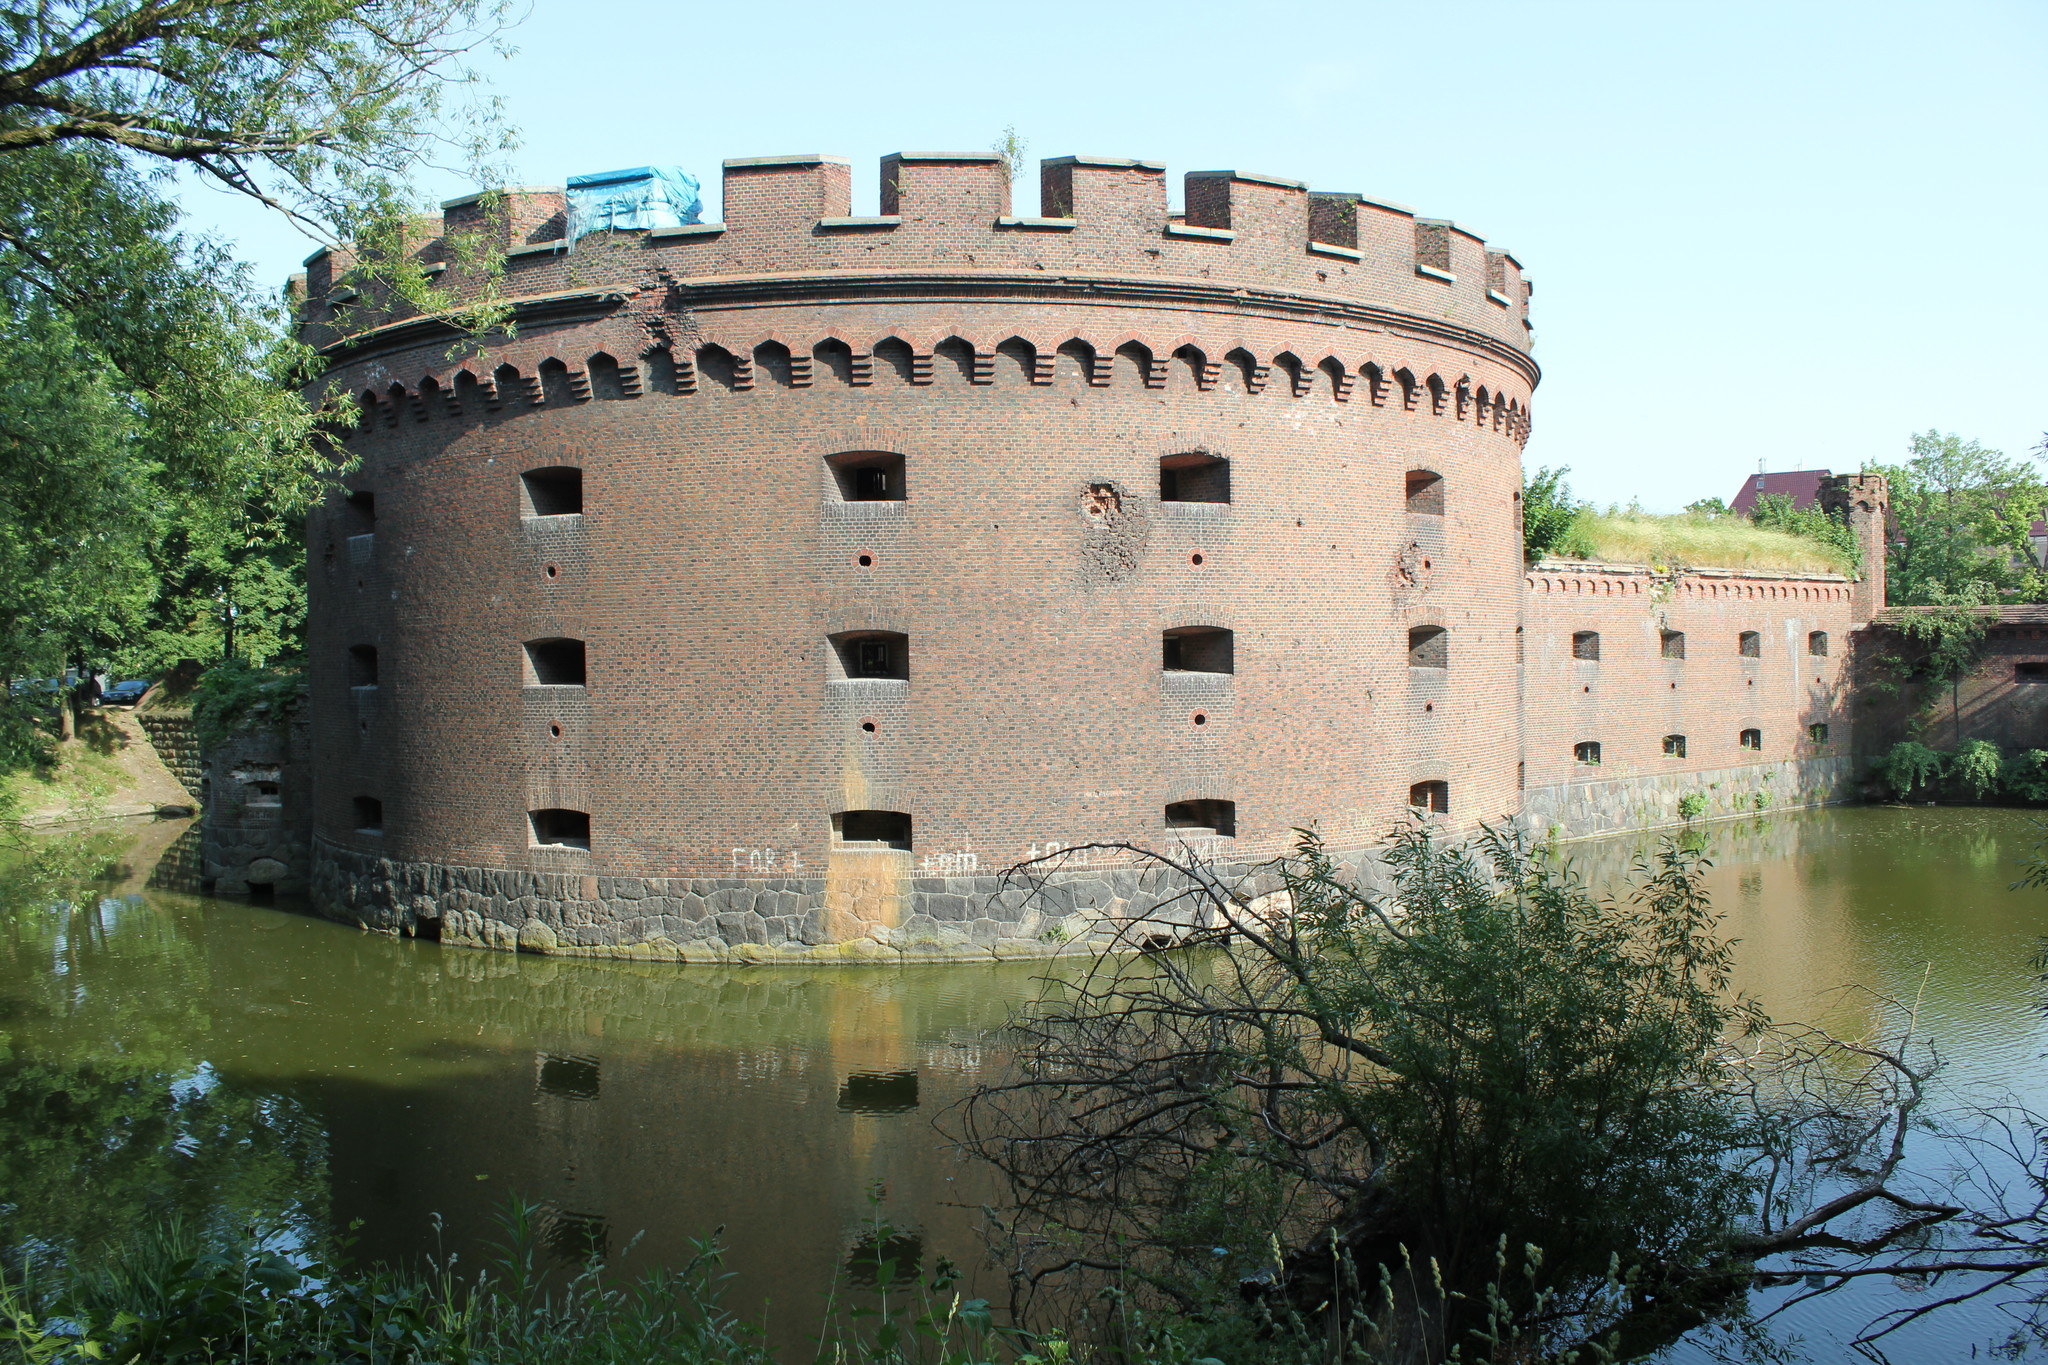 Башня бастиона. Калининград фортификационный. Бастион башня. Вальные укрепления. Бастион.